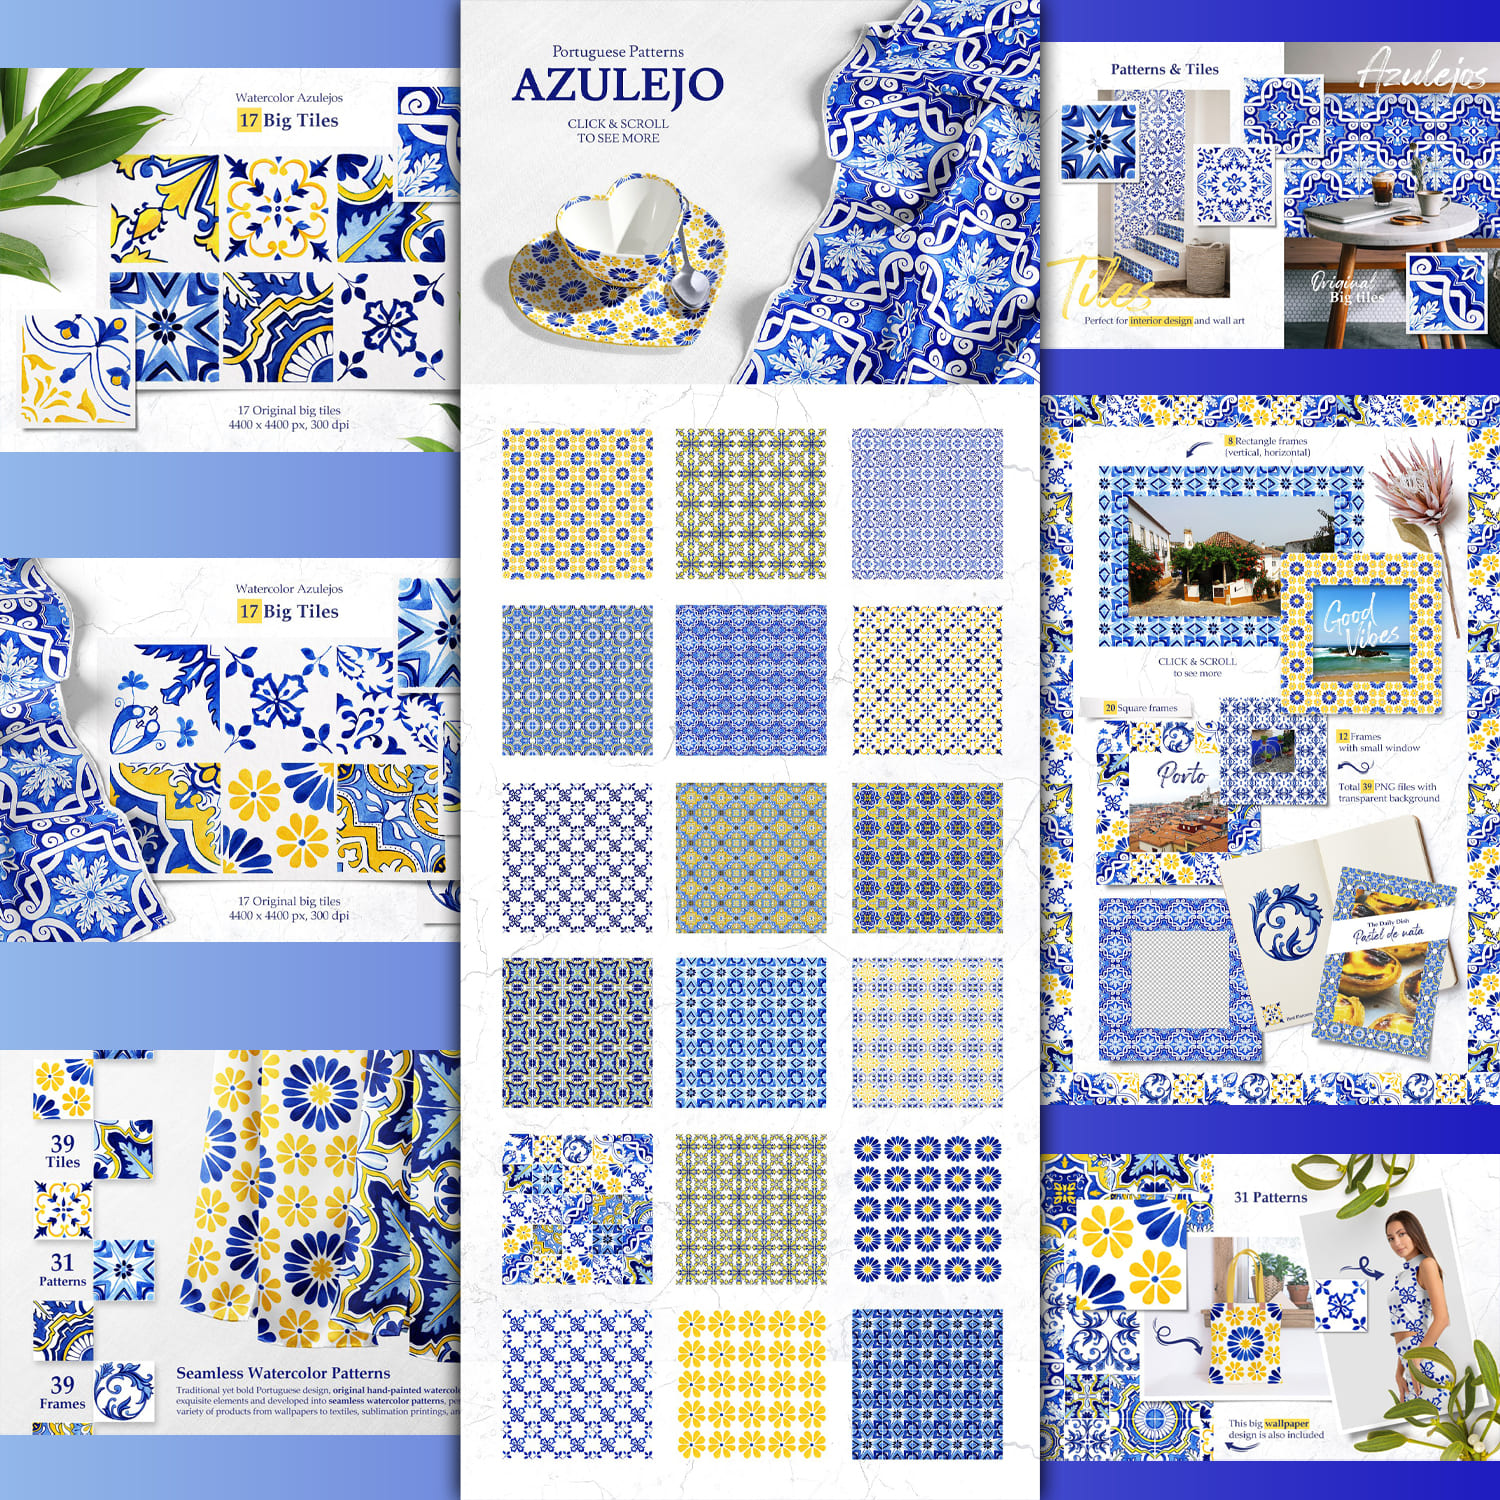 Portuguese azulejos tiles patterns - main image preview.